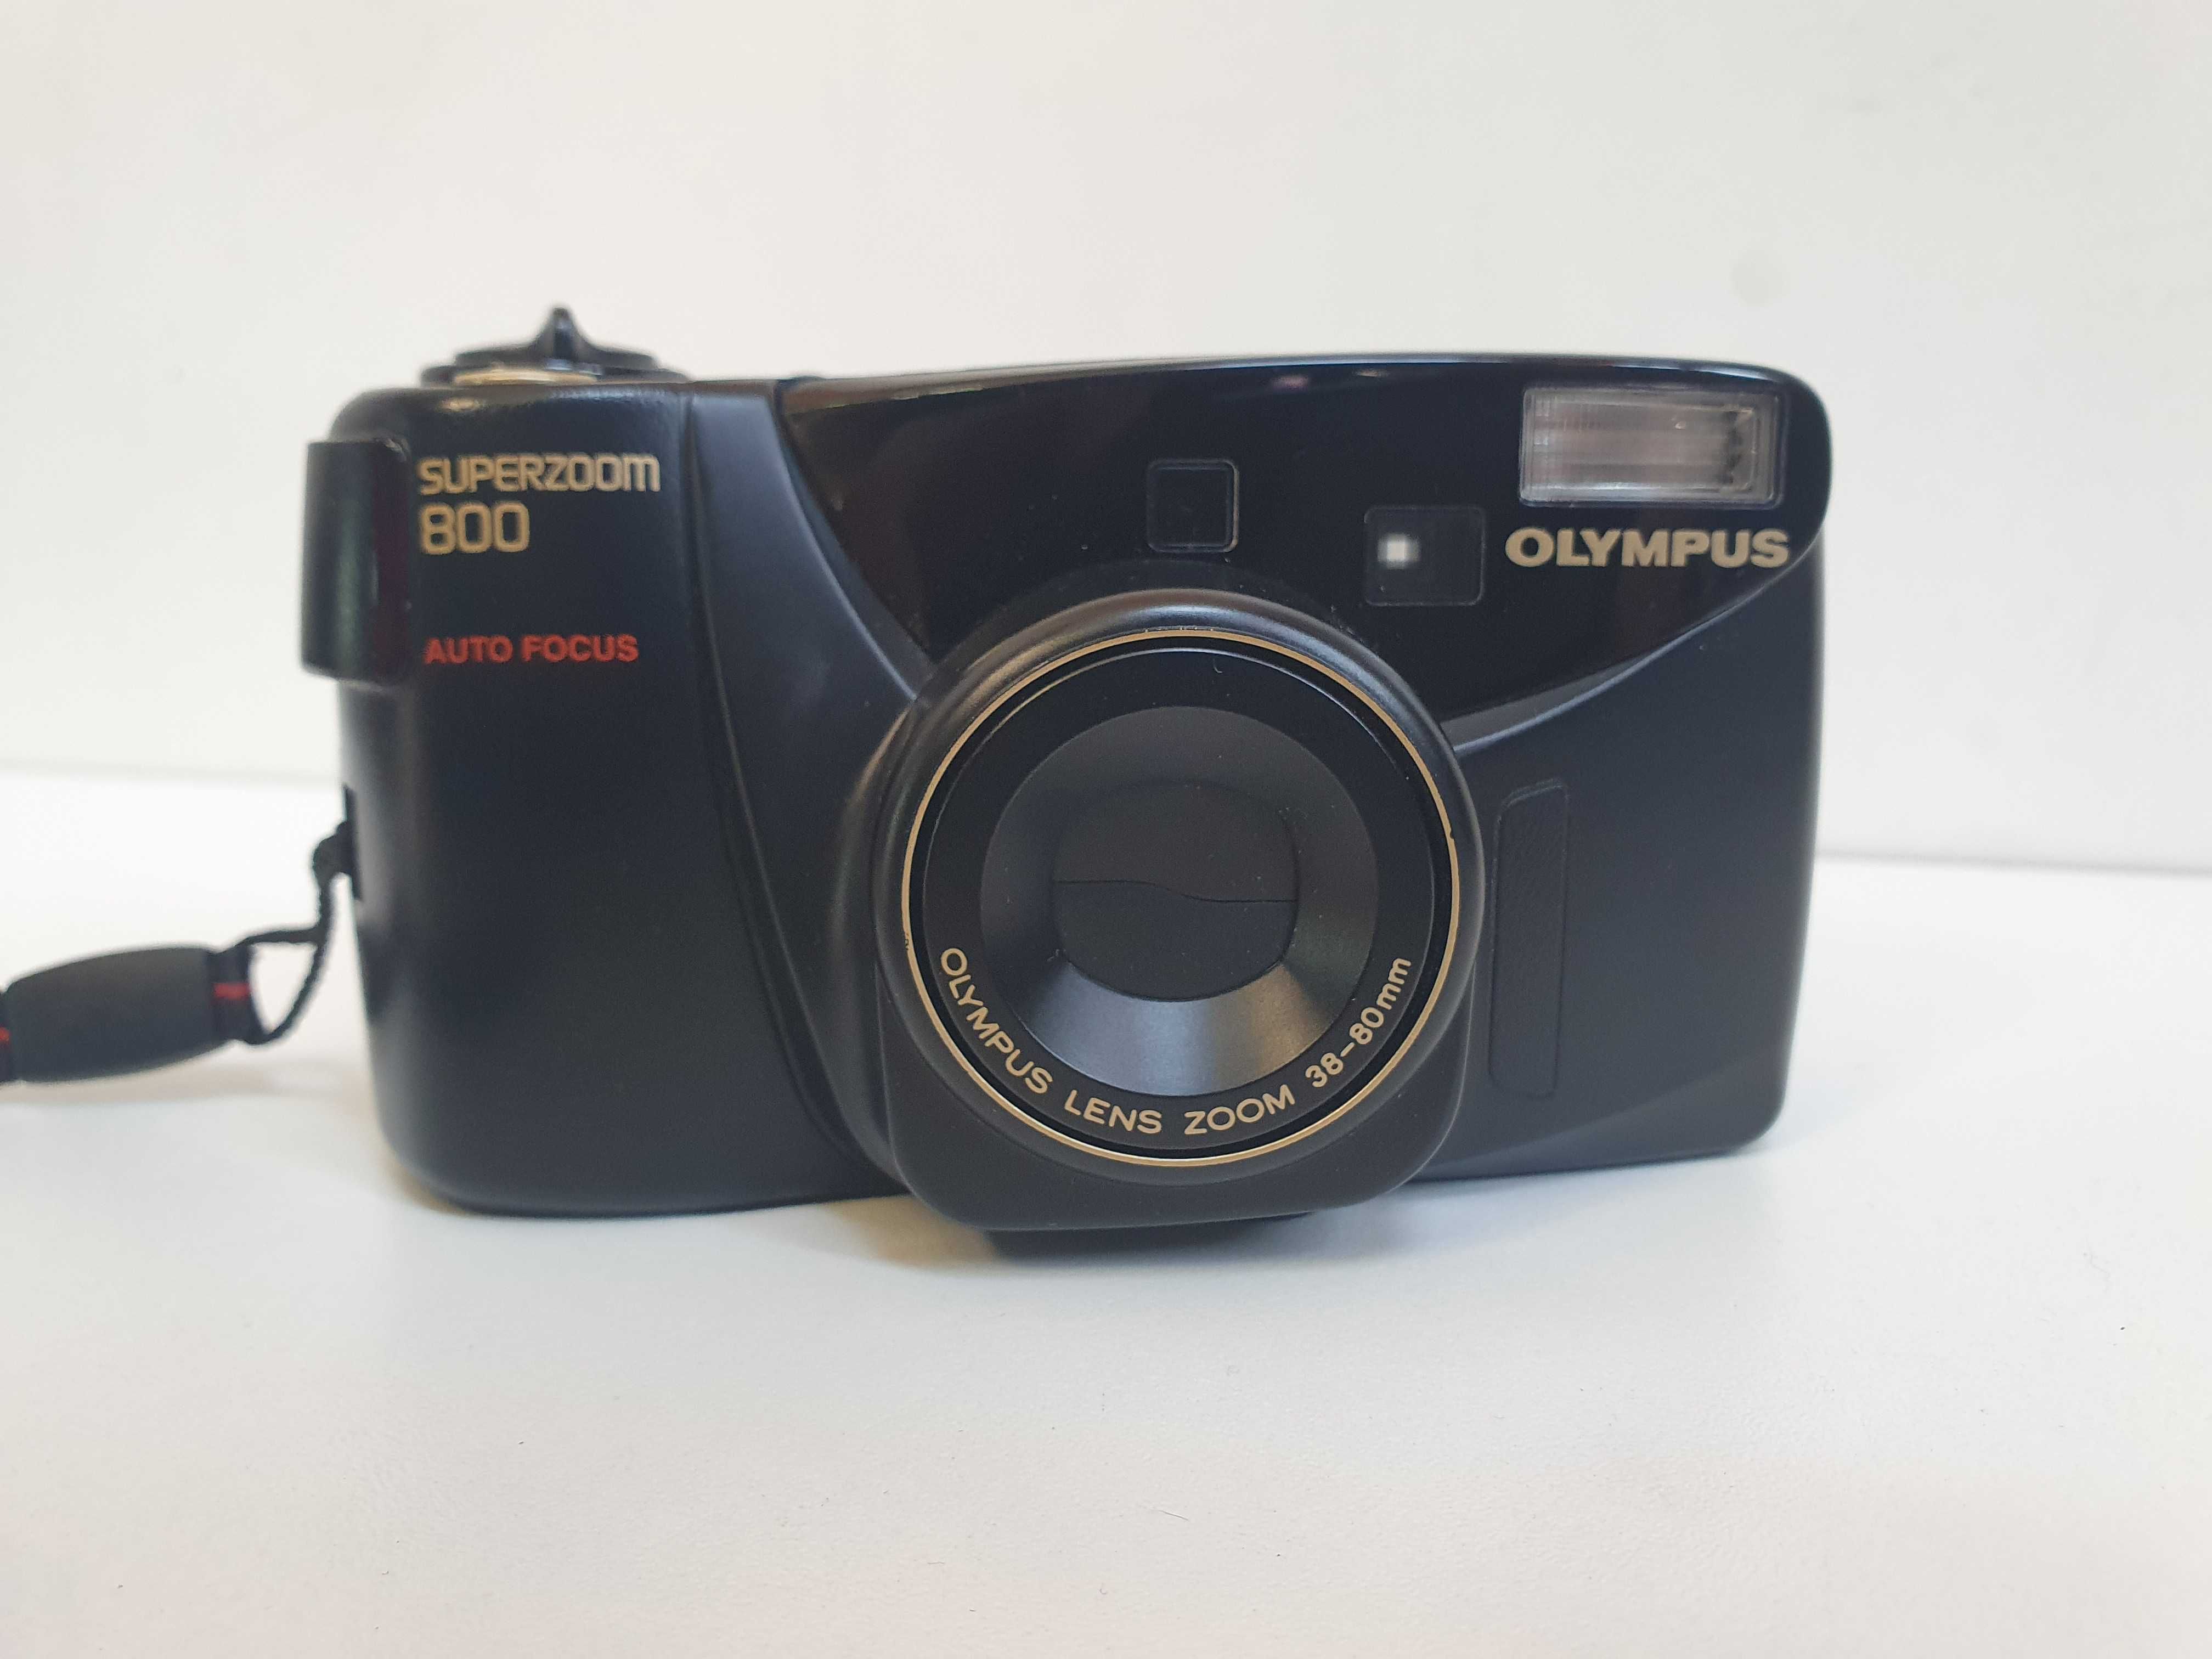 Aparat fotograficzny Olympus Superzoom 800 - Infinity Accura Zoom 80